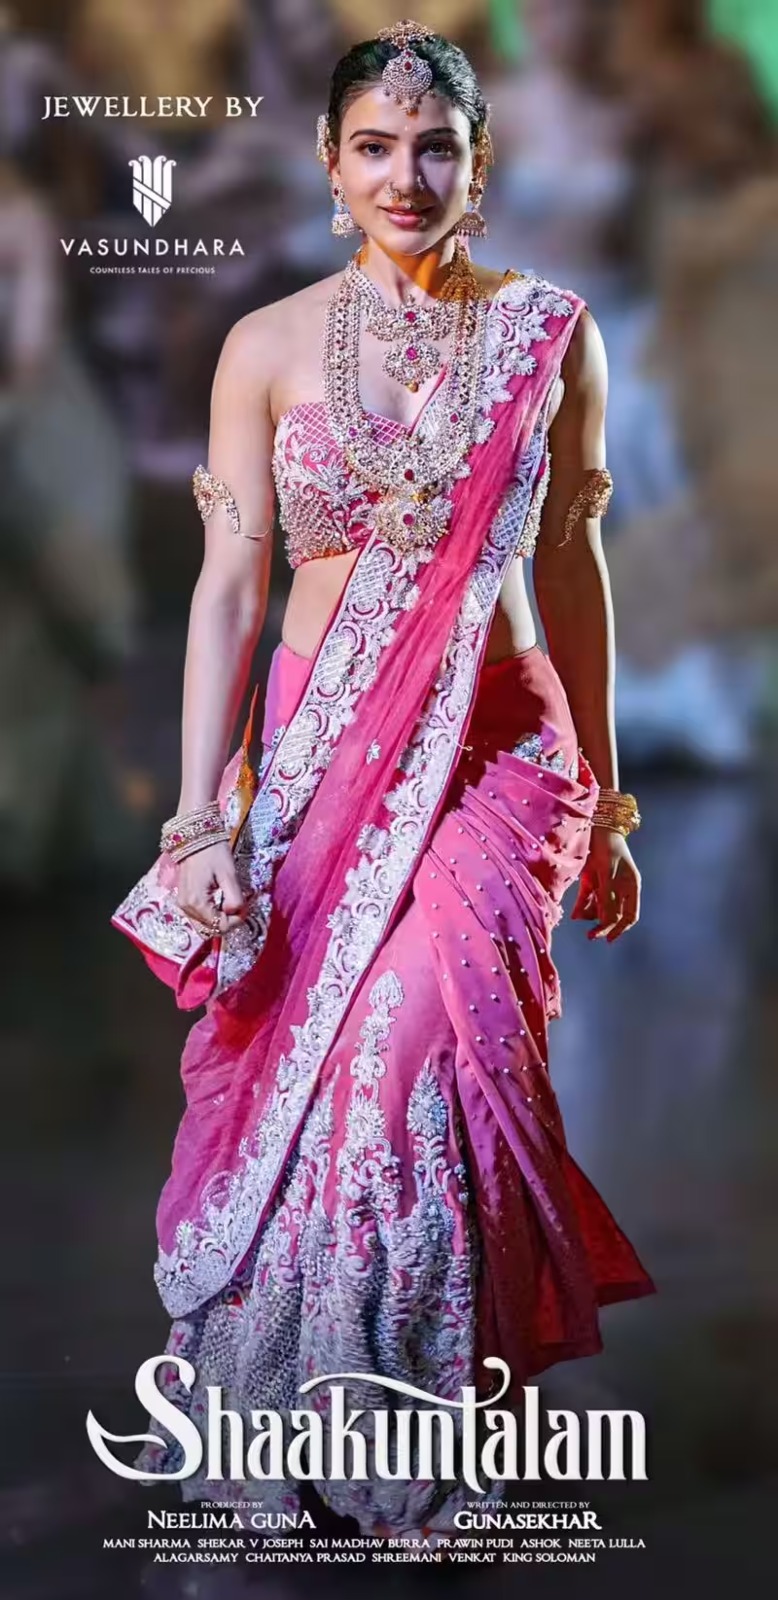 samantha wears 30kg weigh saree for shakuntalam movie shoot